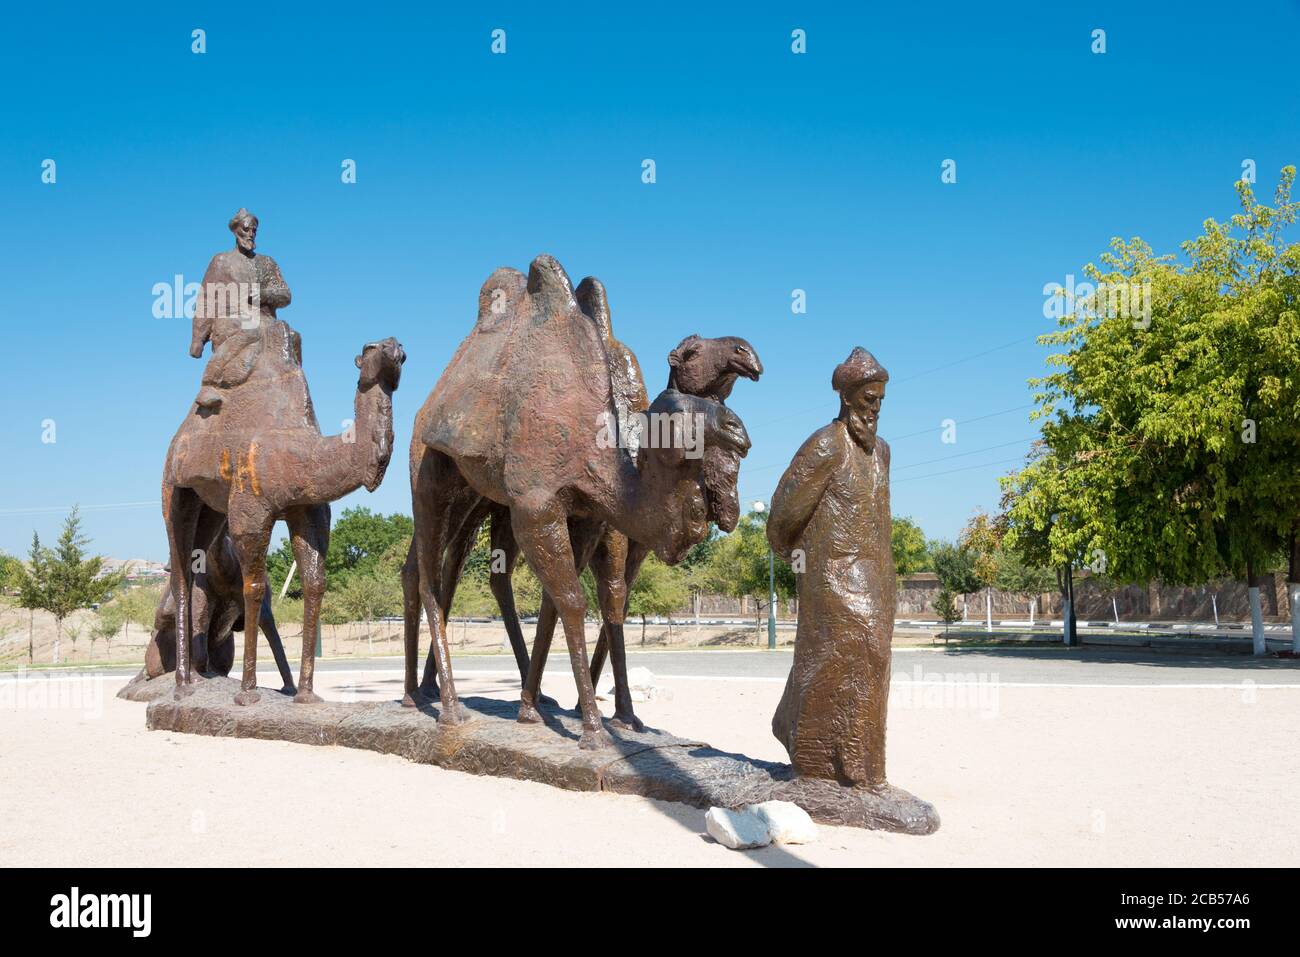 Samarkand, Uzbekistan - Statues of a caravan group outside the Afrasiab Museum in Samarkand, Uzbekistan. Stock Photo